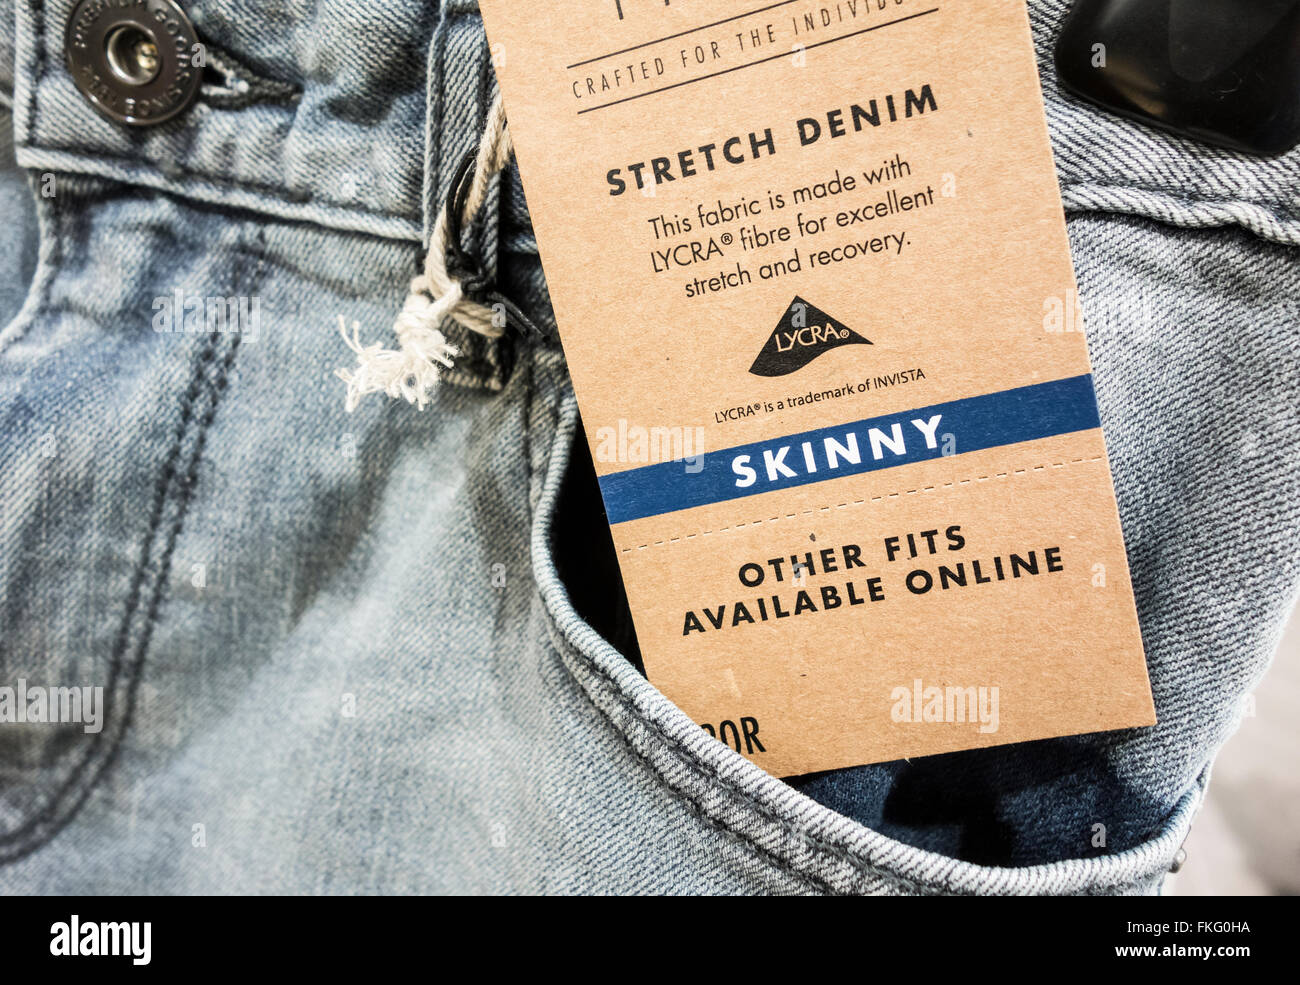 mens next skinny jeans